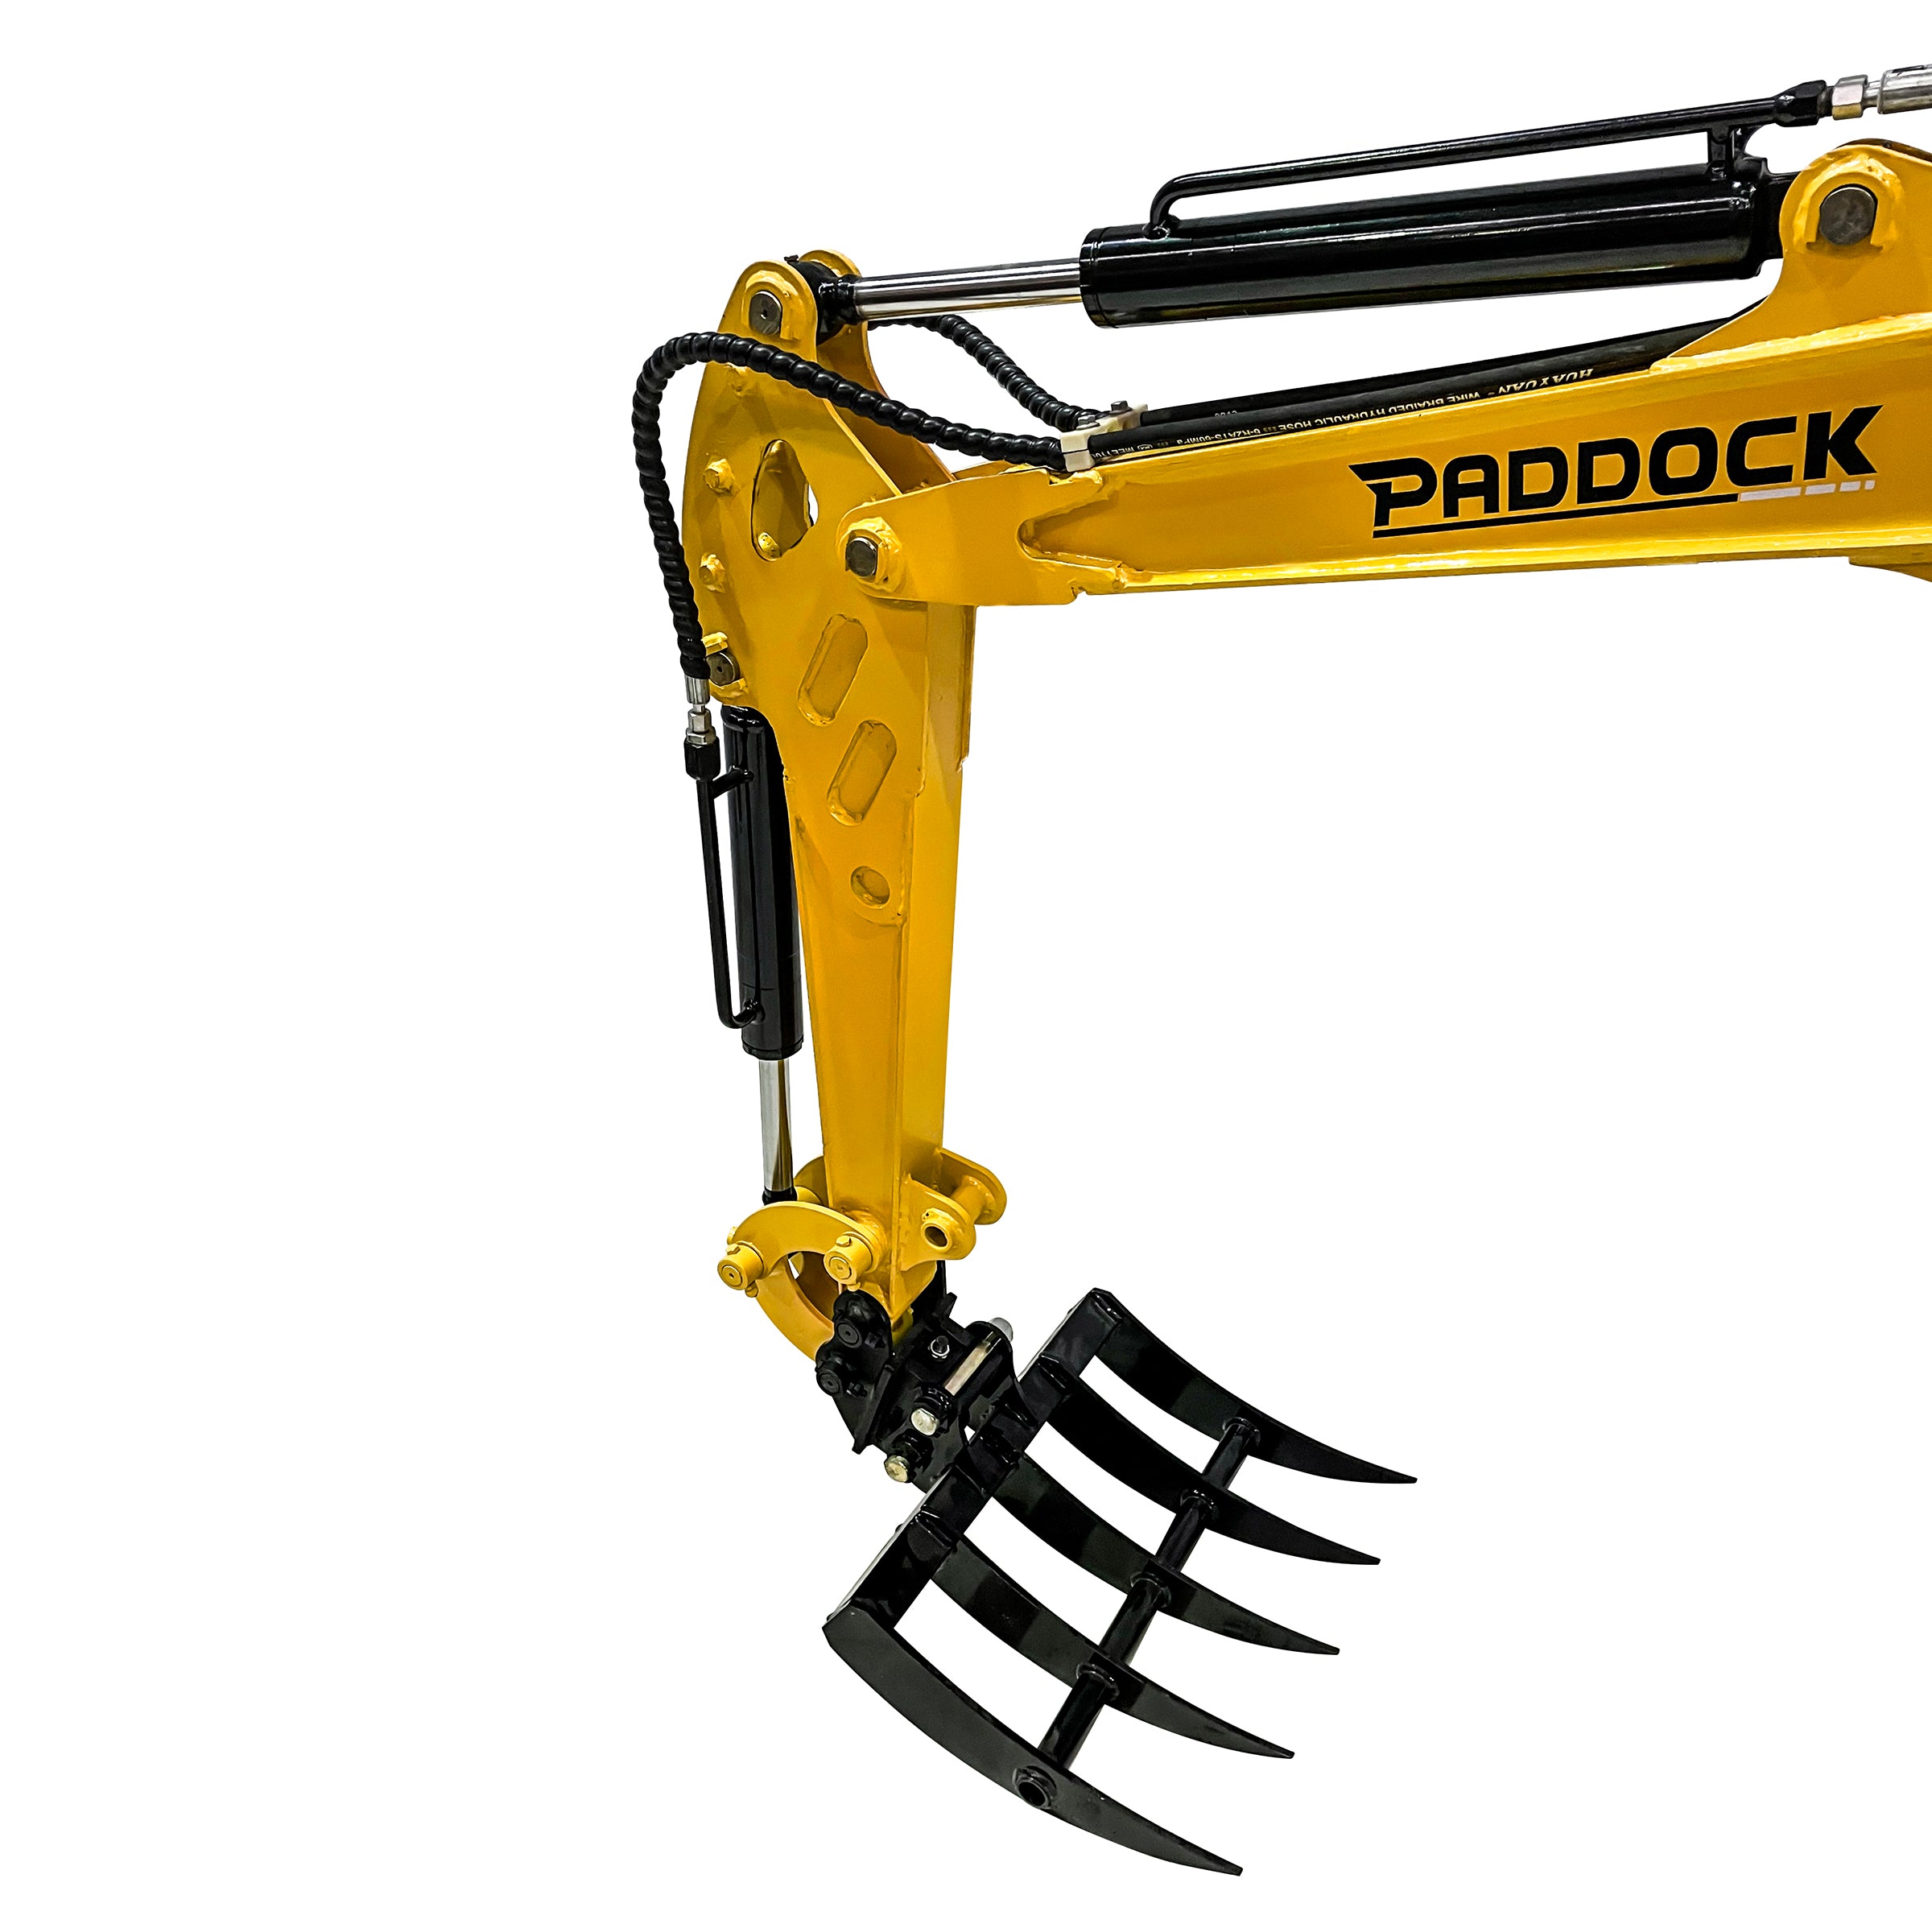 Paddock Machinery excavator rake attachment